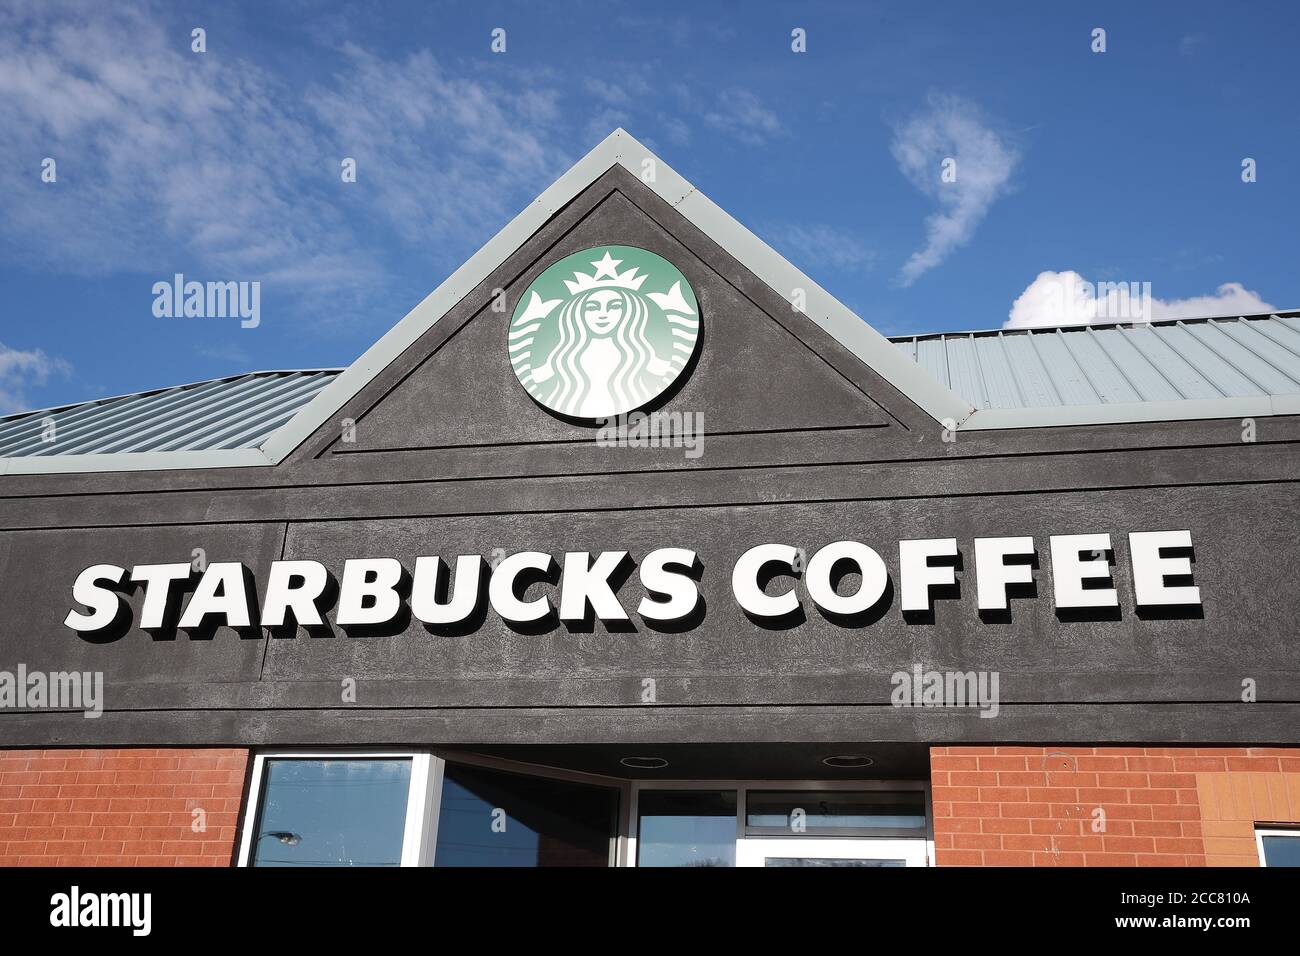 Starbucks Coffee Sign. London Ontario Canada Luke Durda/Alamy Stock Photo